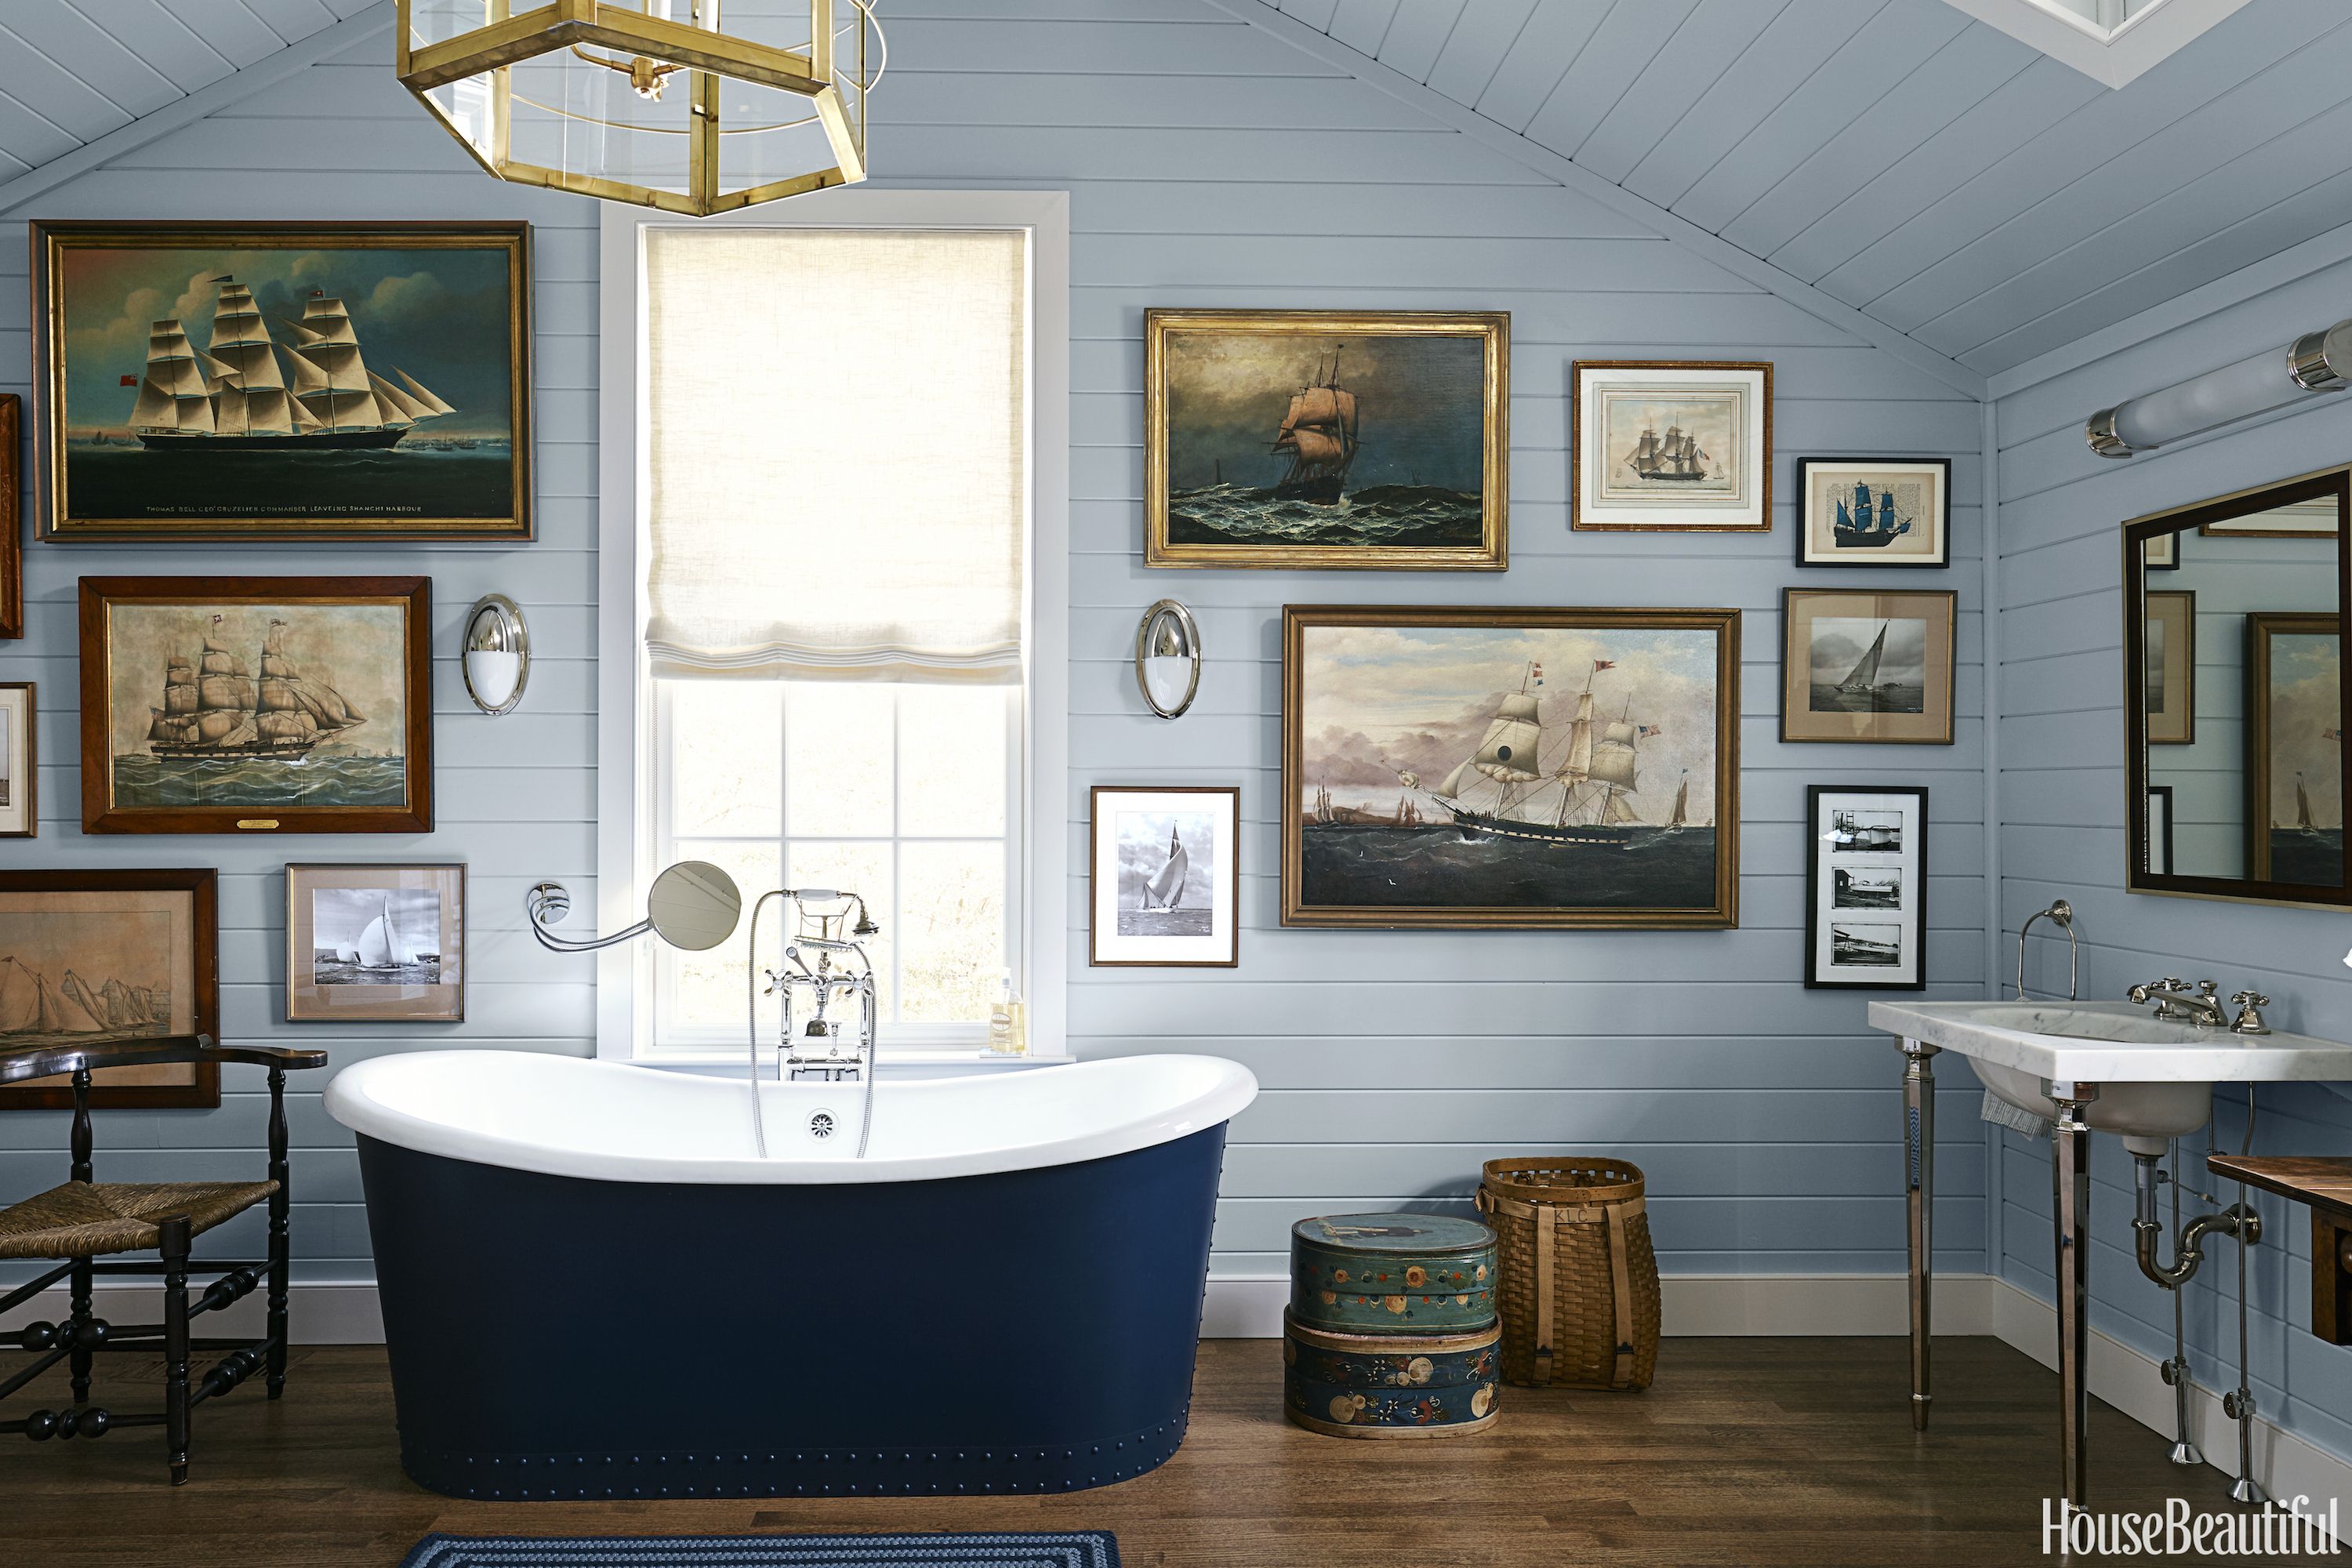 Antique Furniture With Modern Design, Decorating Around A Blue Bathtub